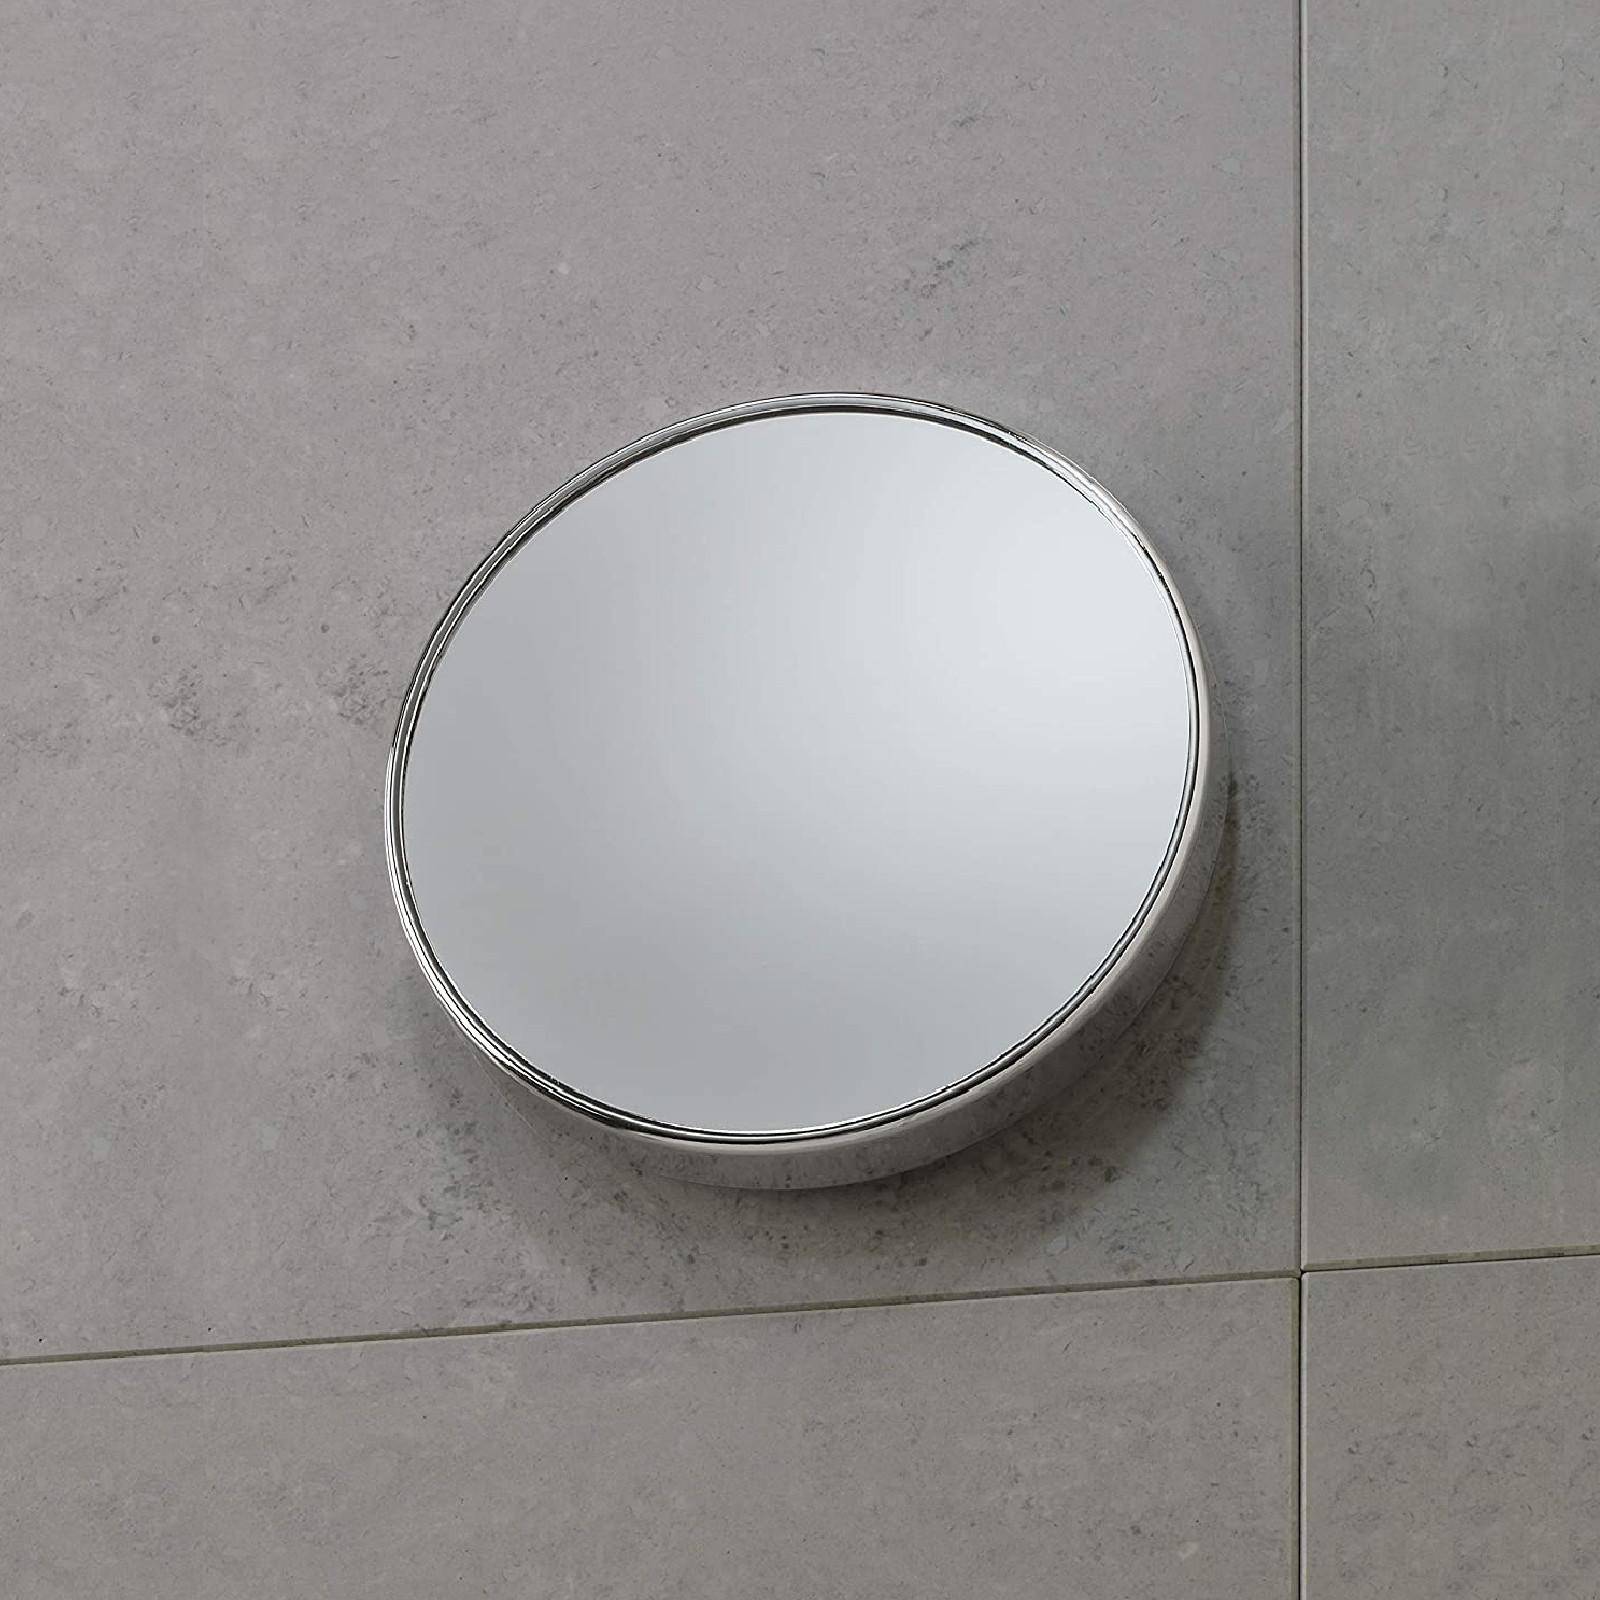 Specchio tondo Ø15 cm con ventose ingrandimento 3x - Gedy